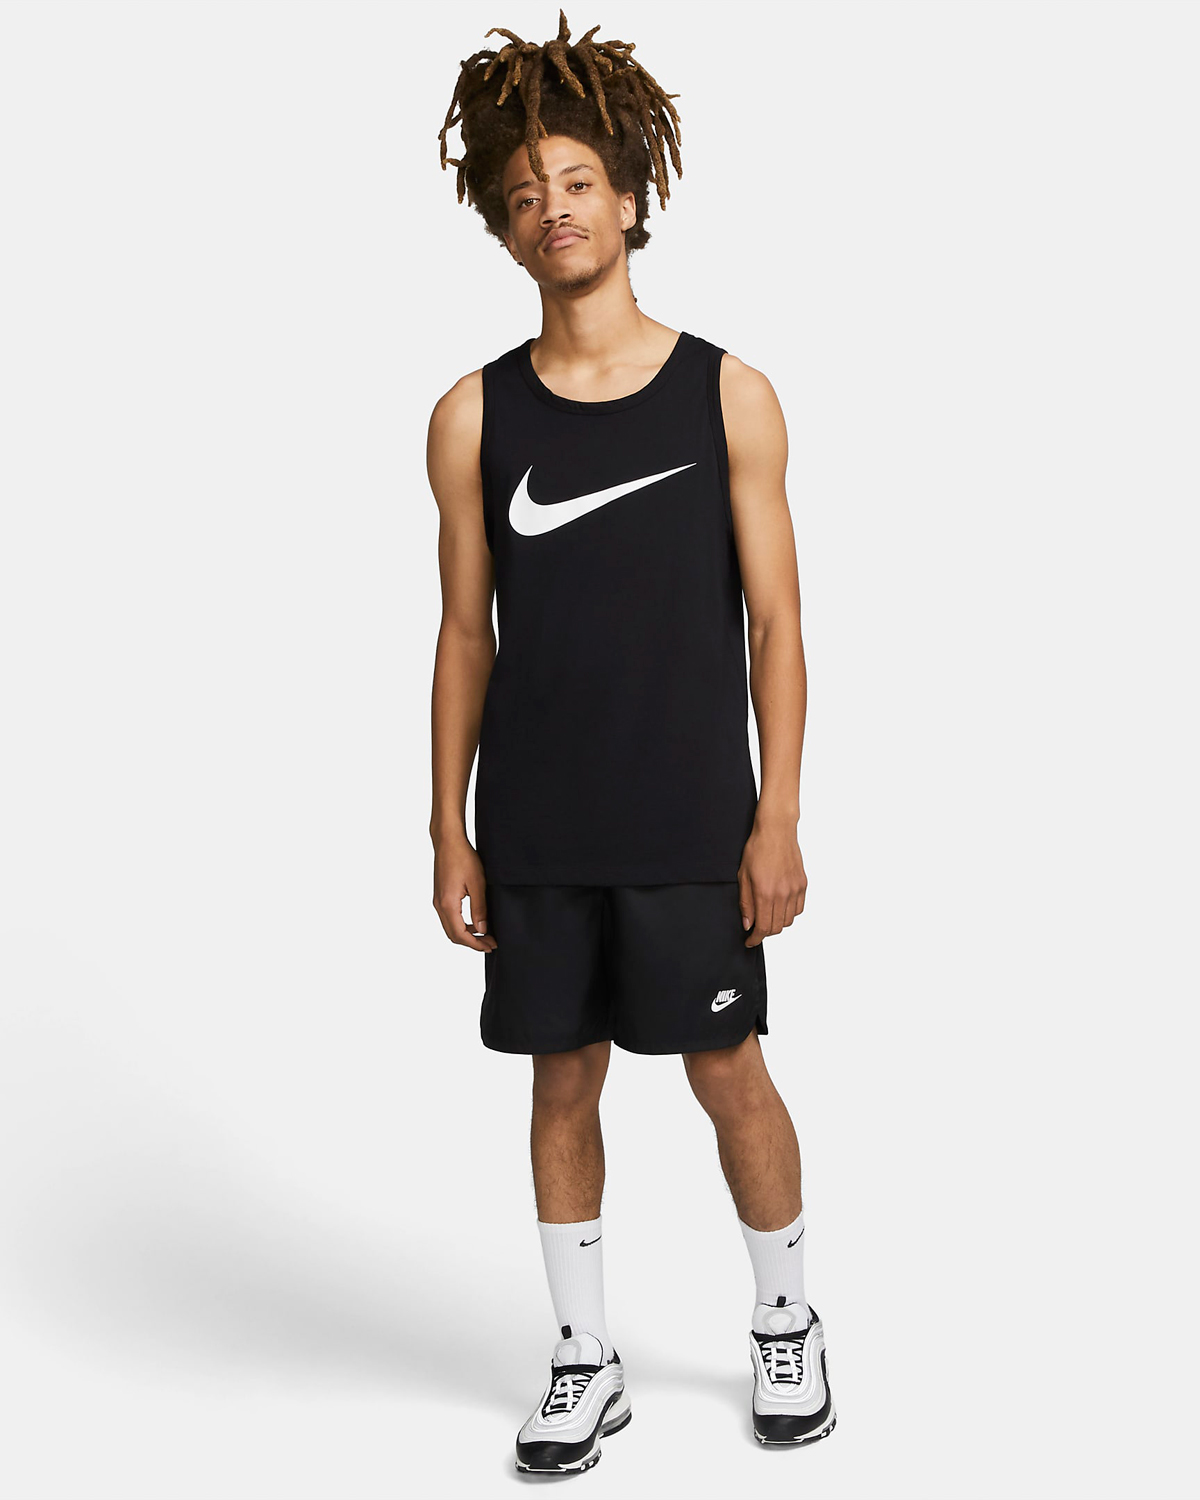 Nike-Sportswear-Swoosh-Tank-Top-Black-White-Outfit